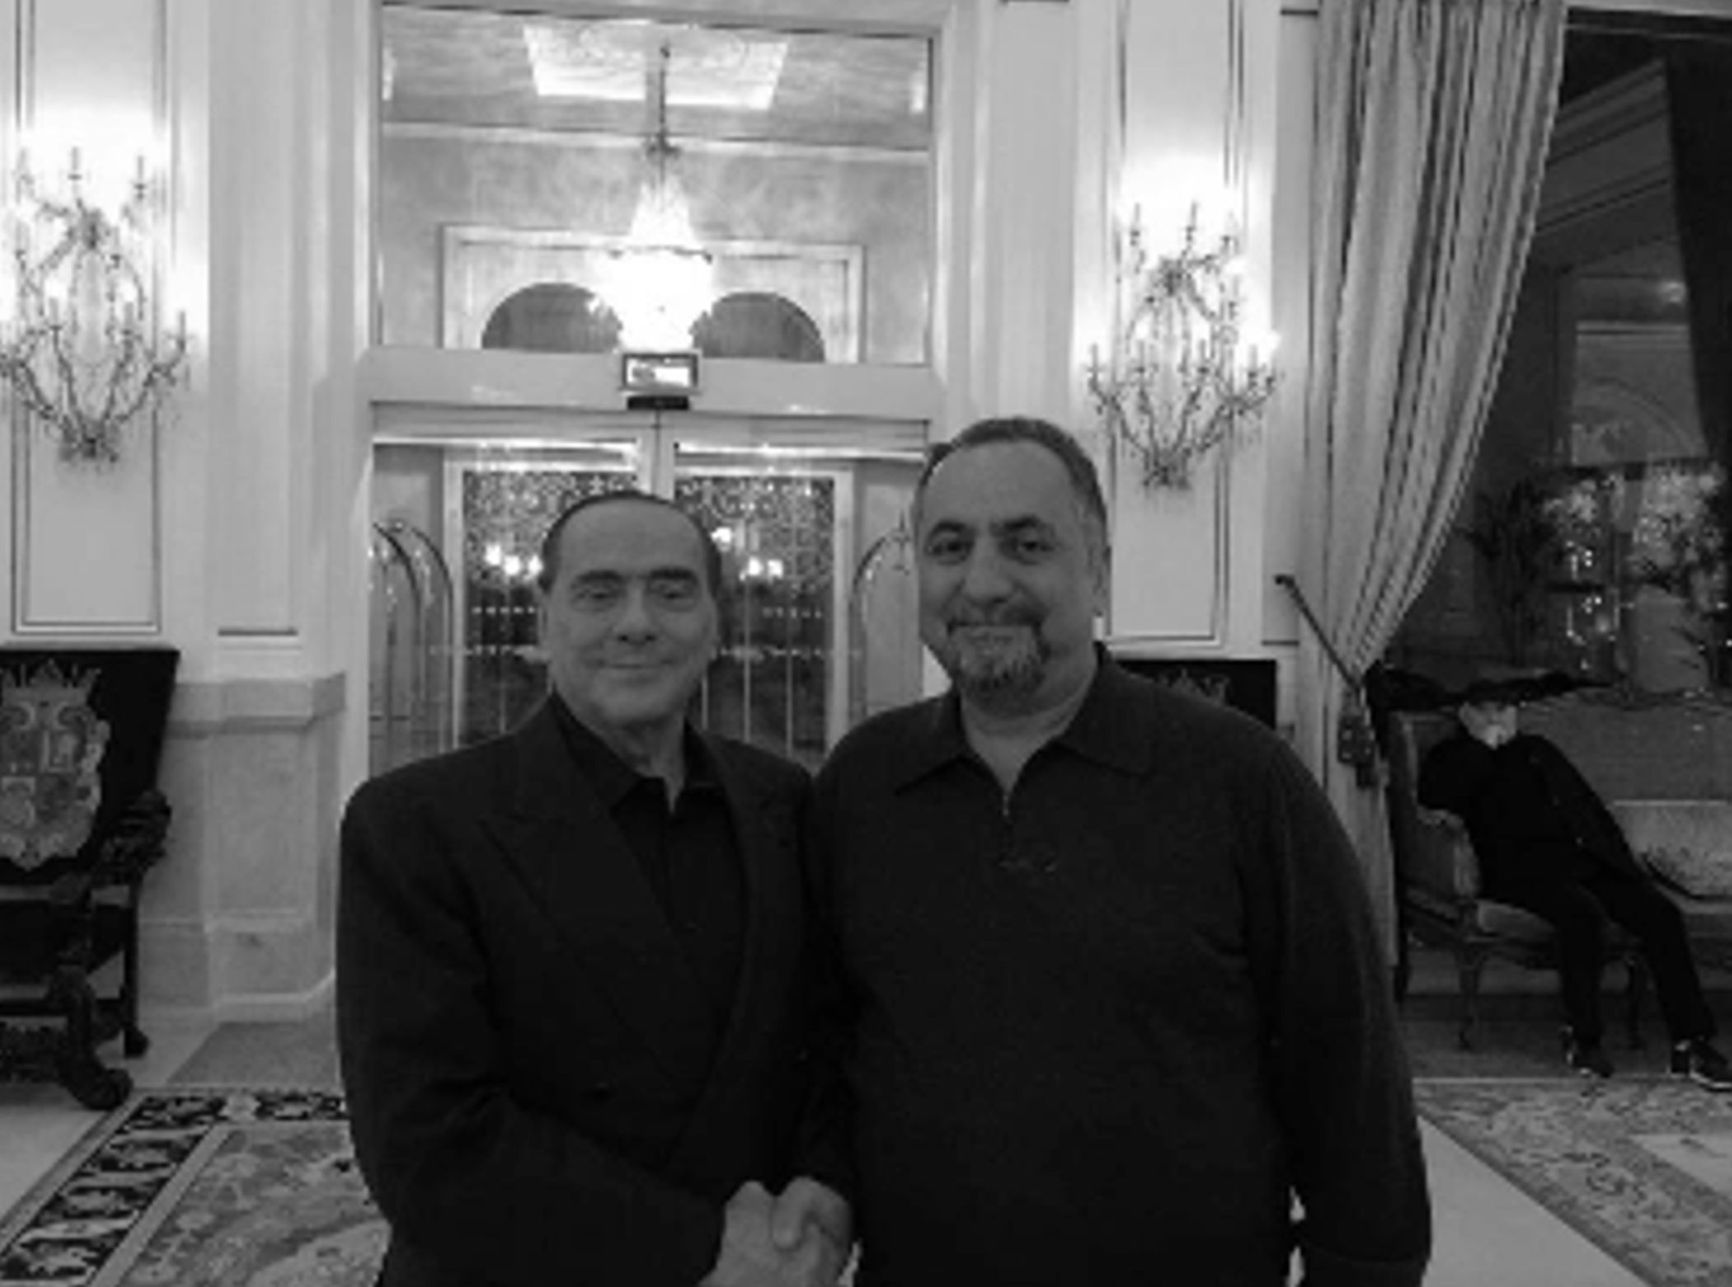 Gasumyanov and former Italian prime minister Silvio Berlusconi